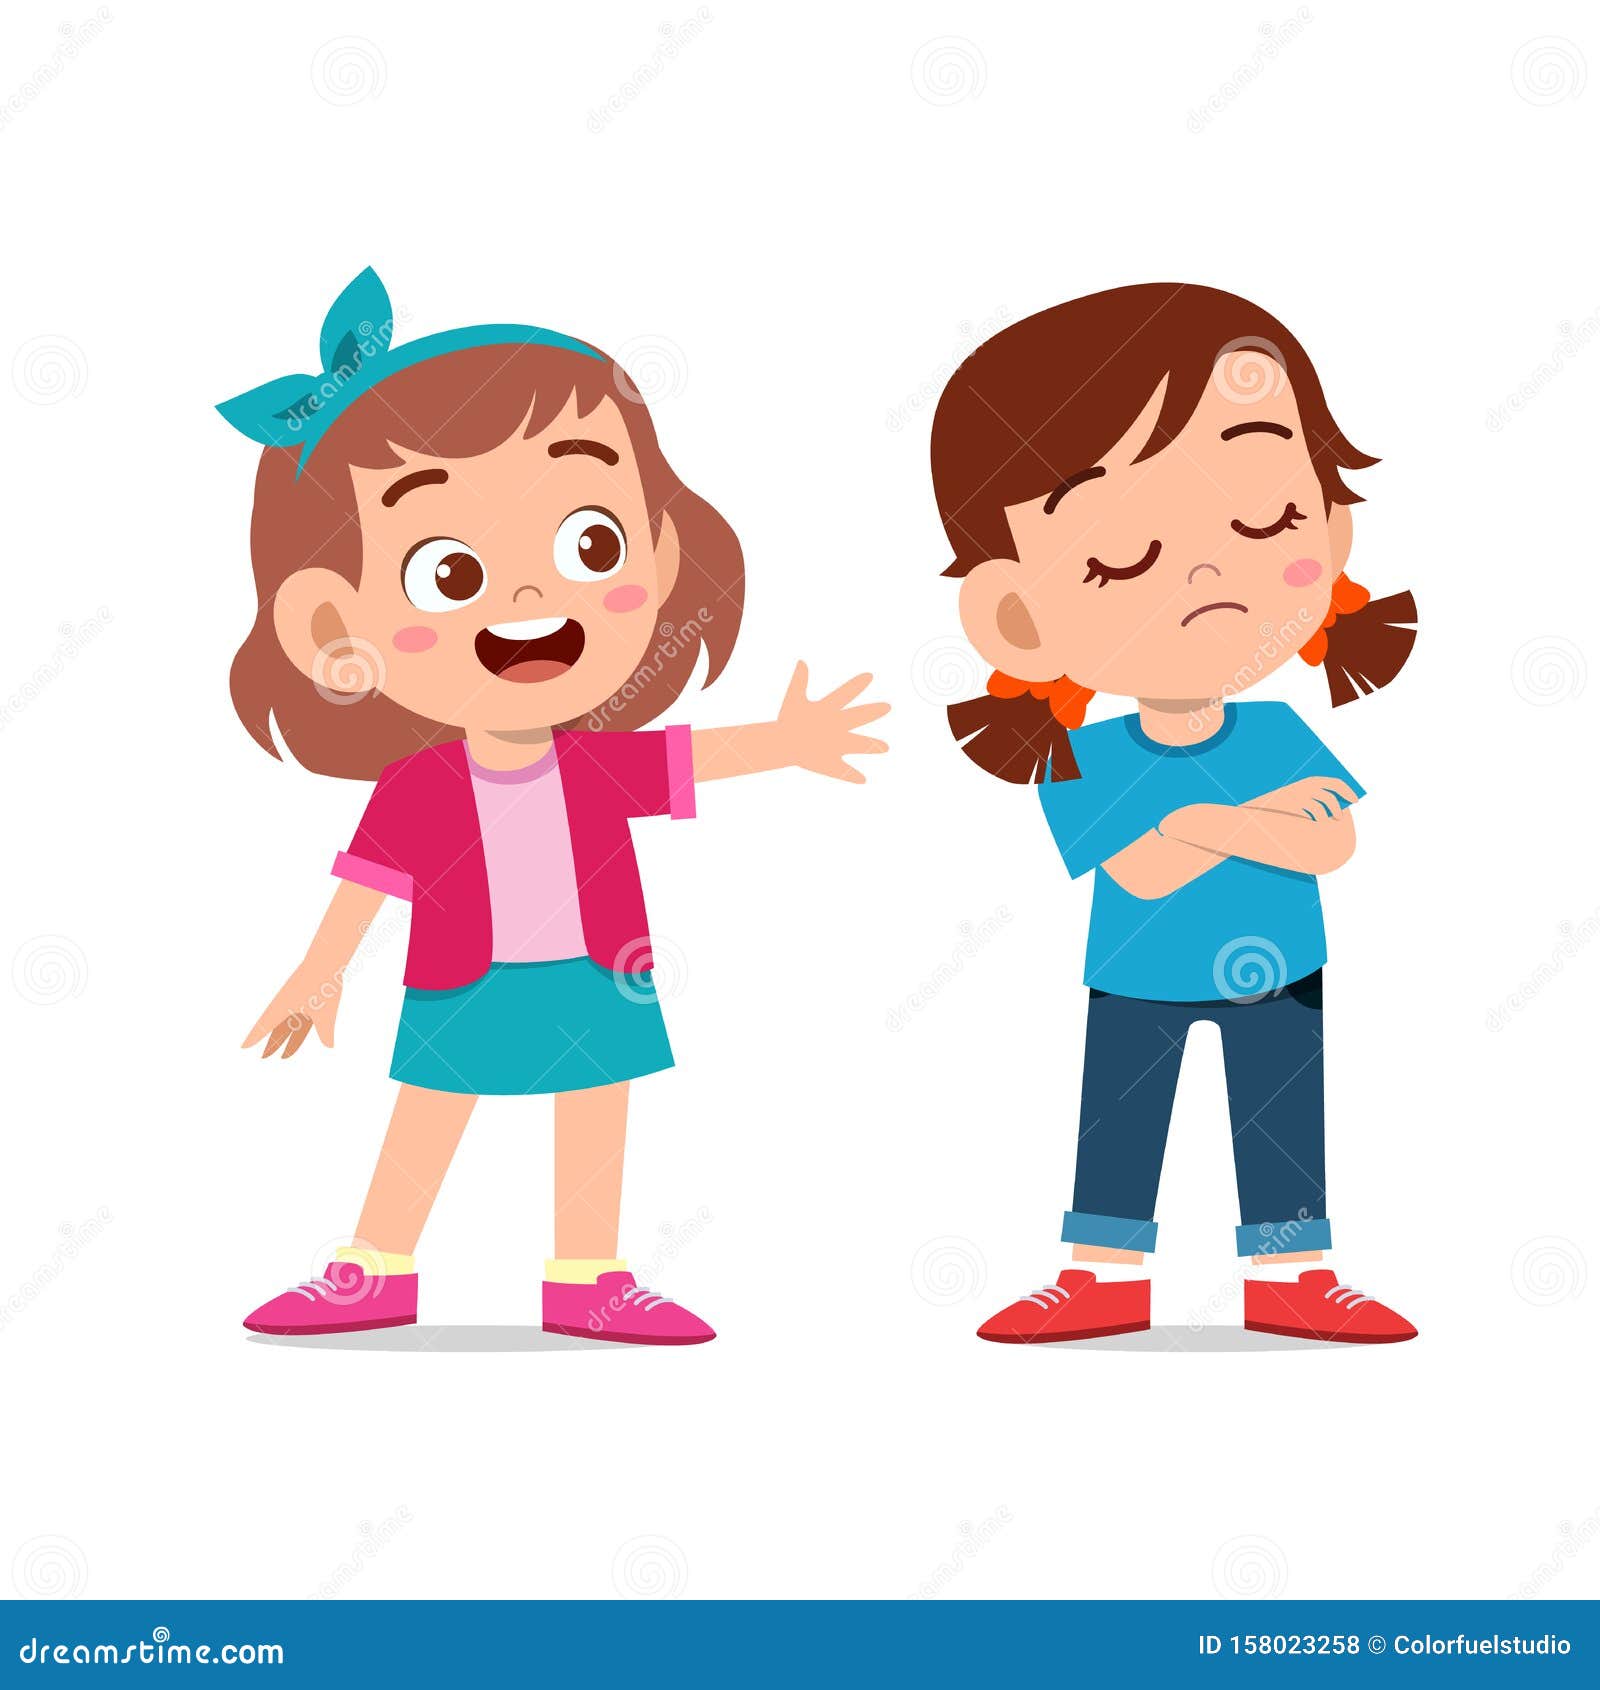 Kids Argue Fight With Friend Vector Illustration | CartoonDealer.com ... Kids Argue Clipart